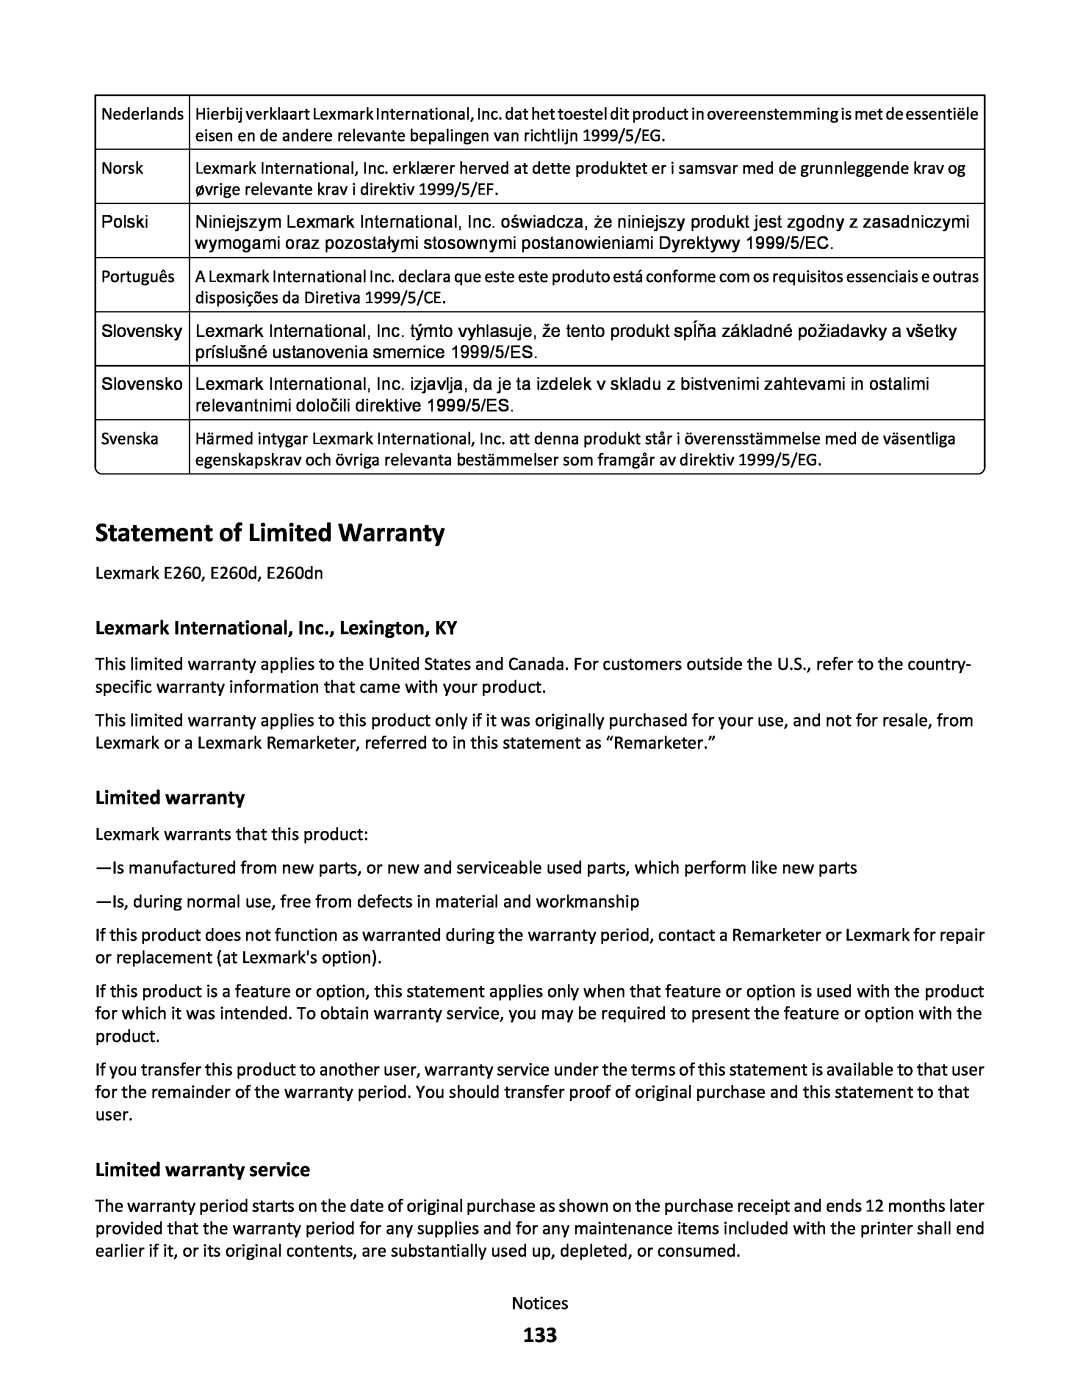 Lexmark 34S0305, 34S0100 manual Statement of Limited Warranty, Lexmark International, Inc., Lexington, KY, Limited warranty 